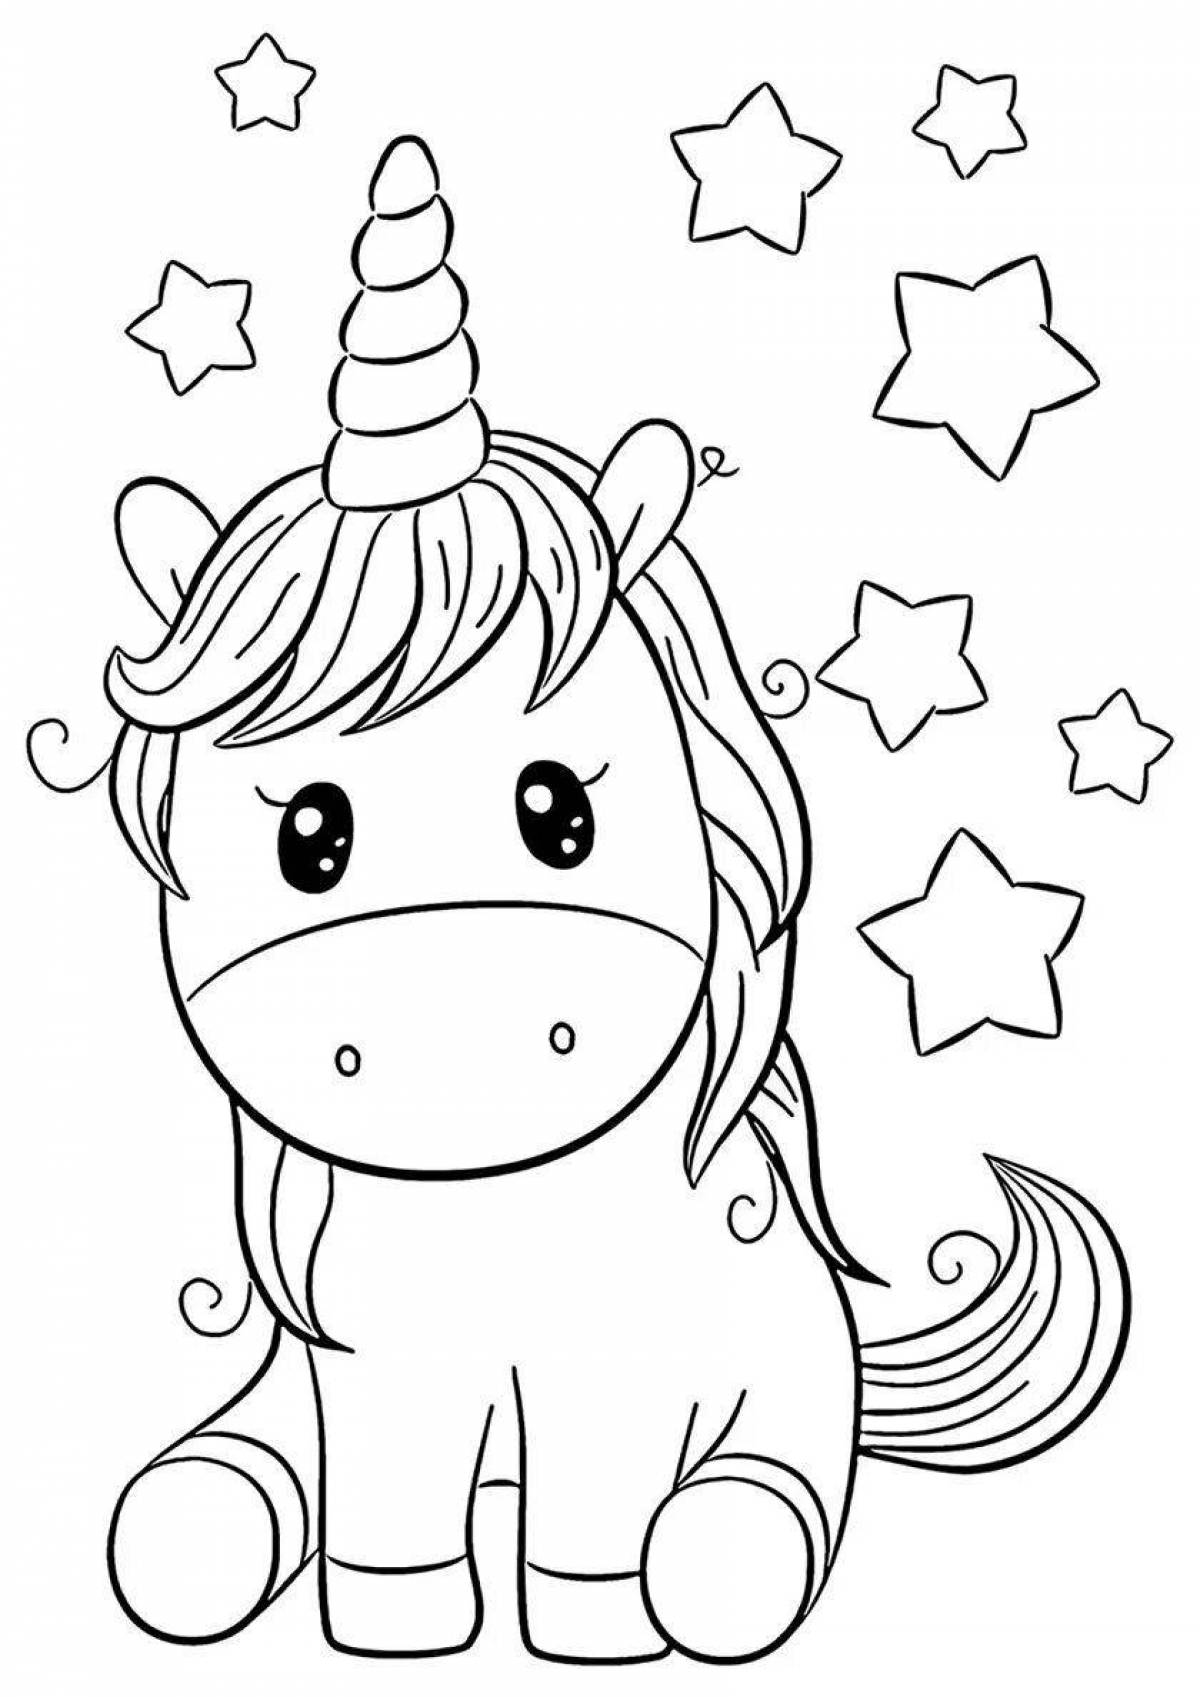 Baby unicorn #1